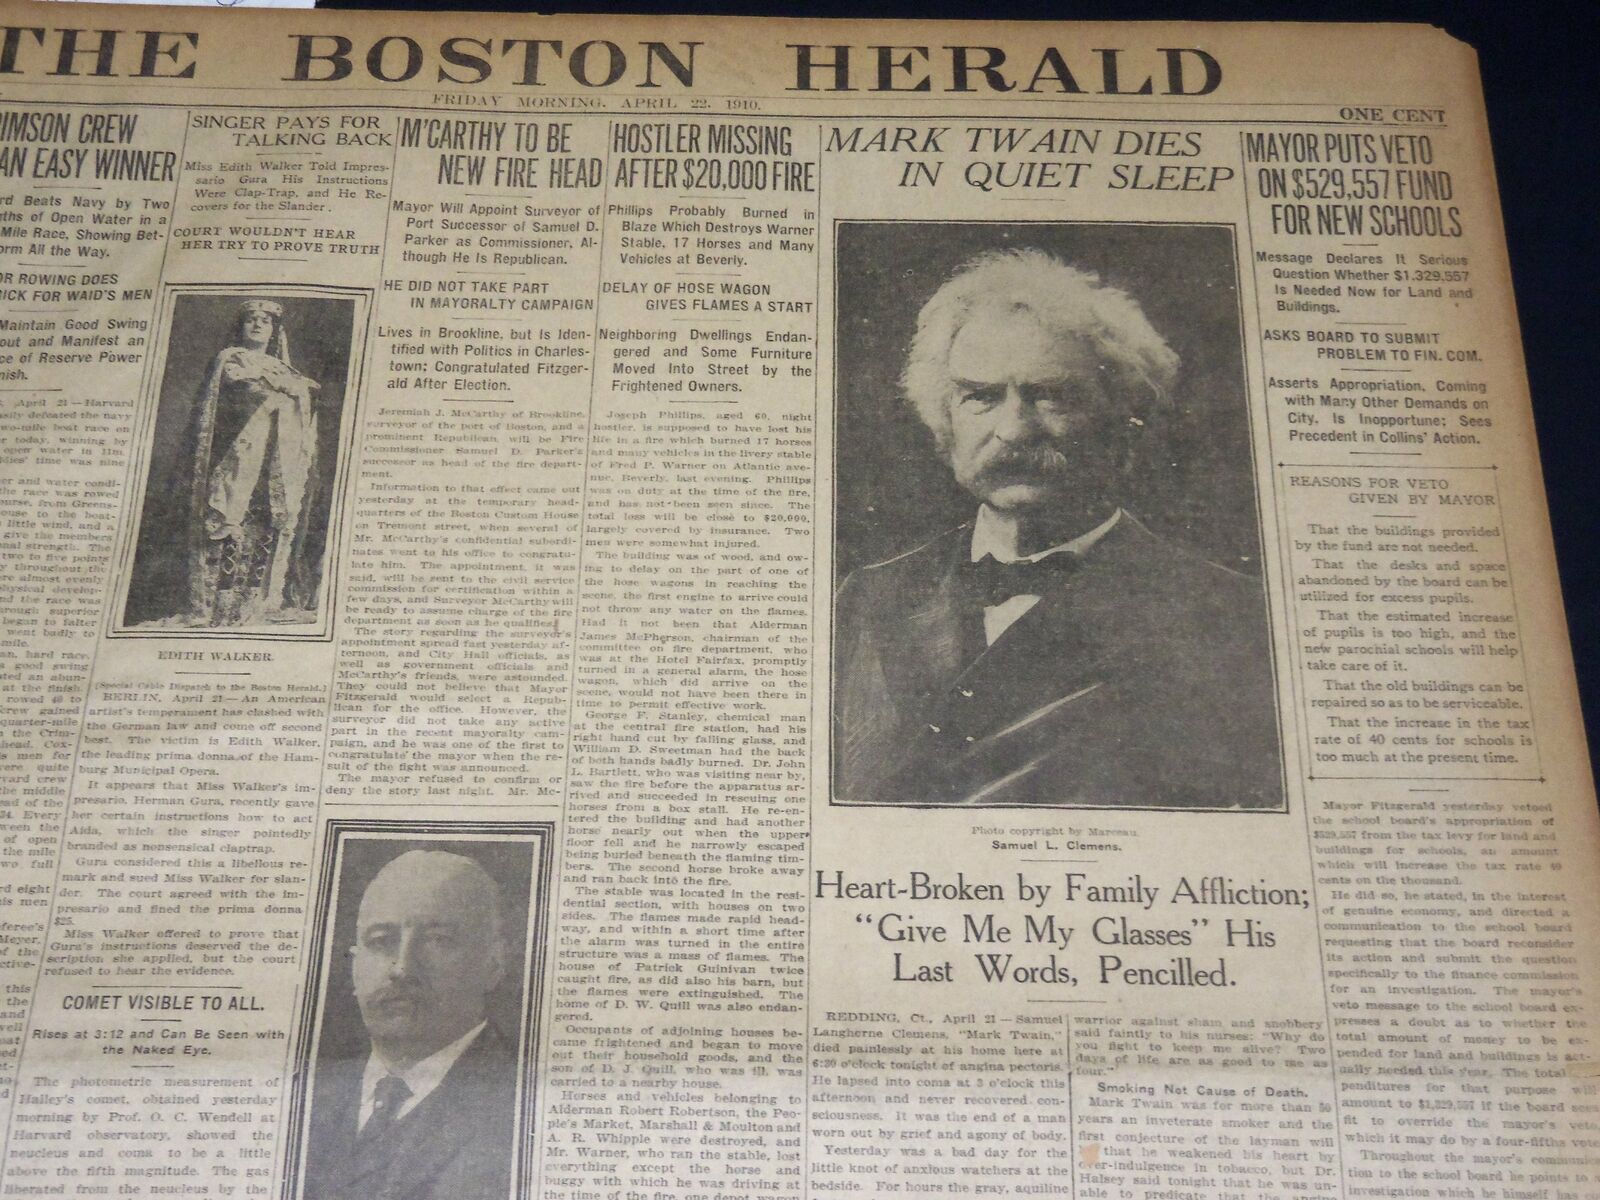 1910 APRIL 22 THE BOSTON HERALD - MARK TWAIN DIES IN QUIET SLEEP - BH 397